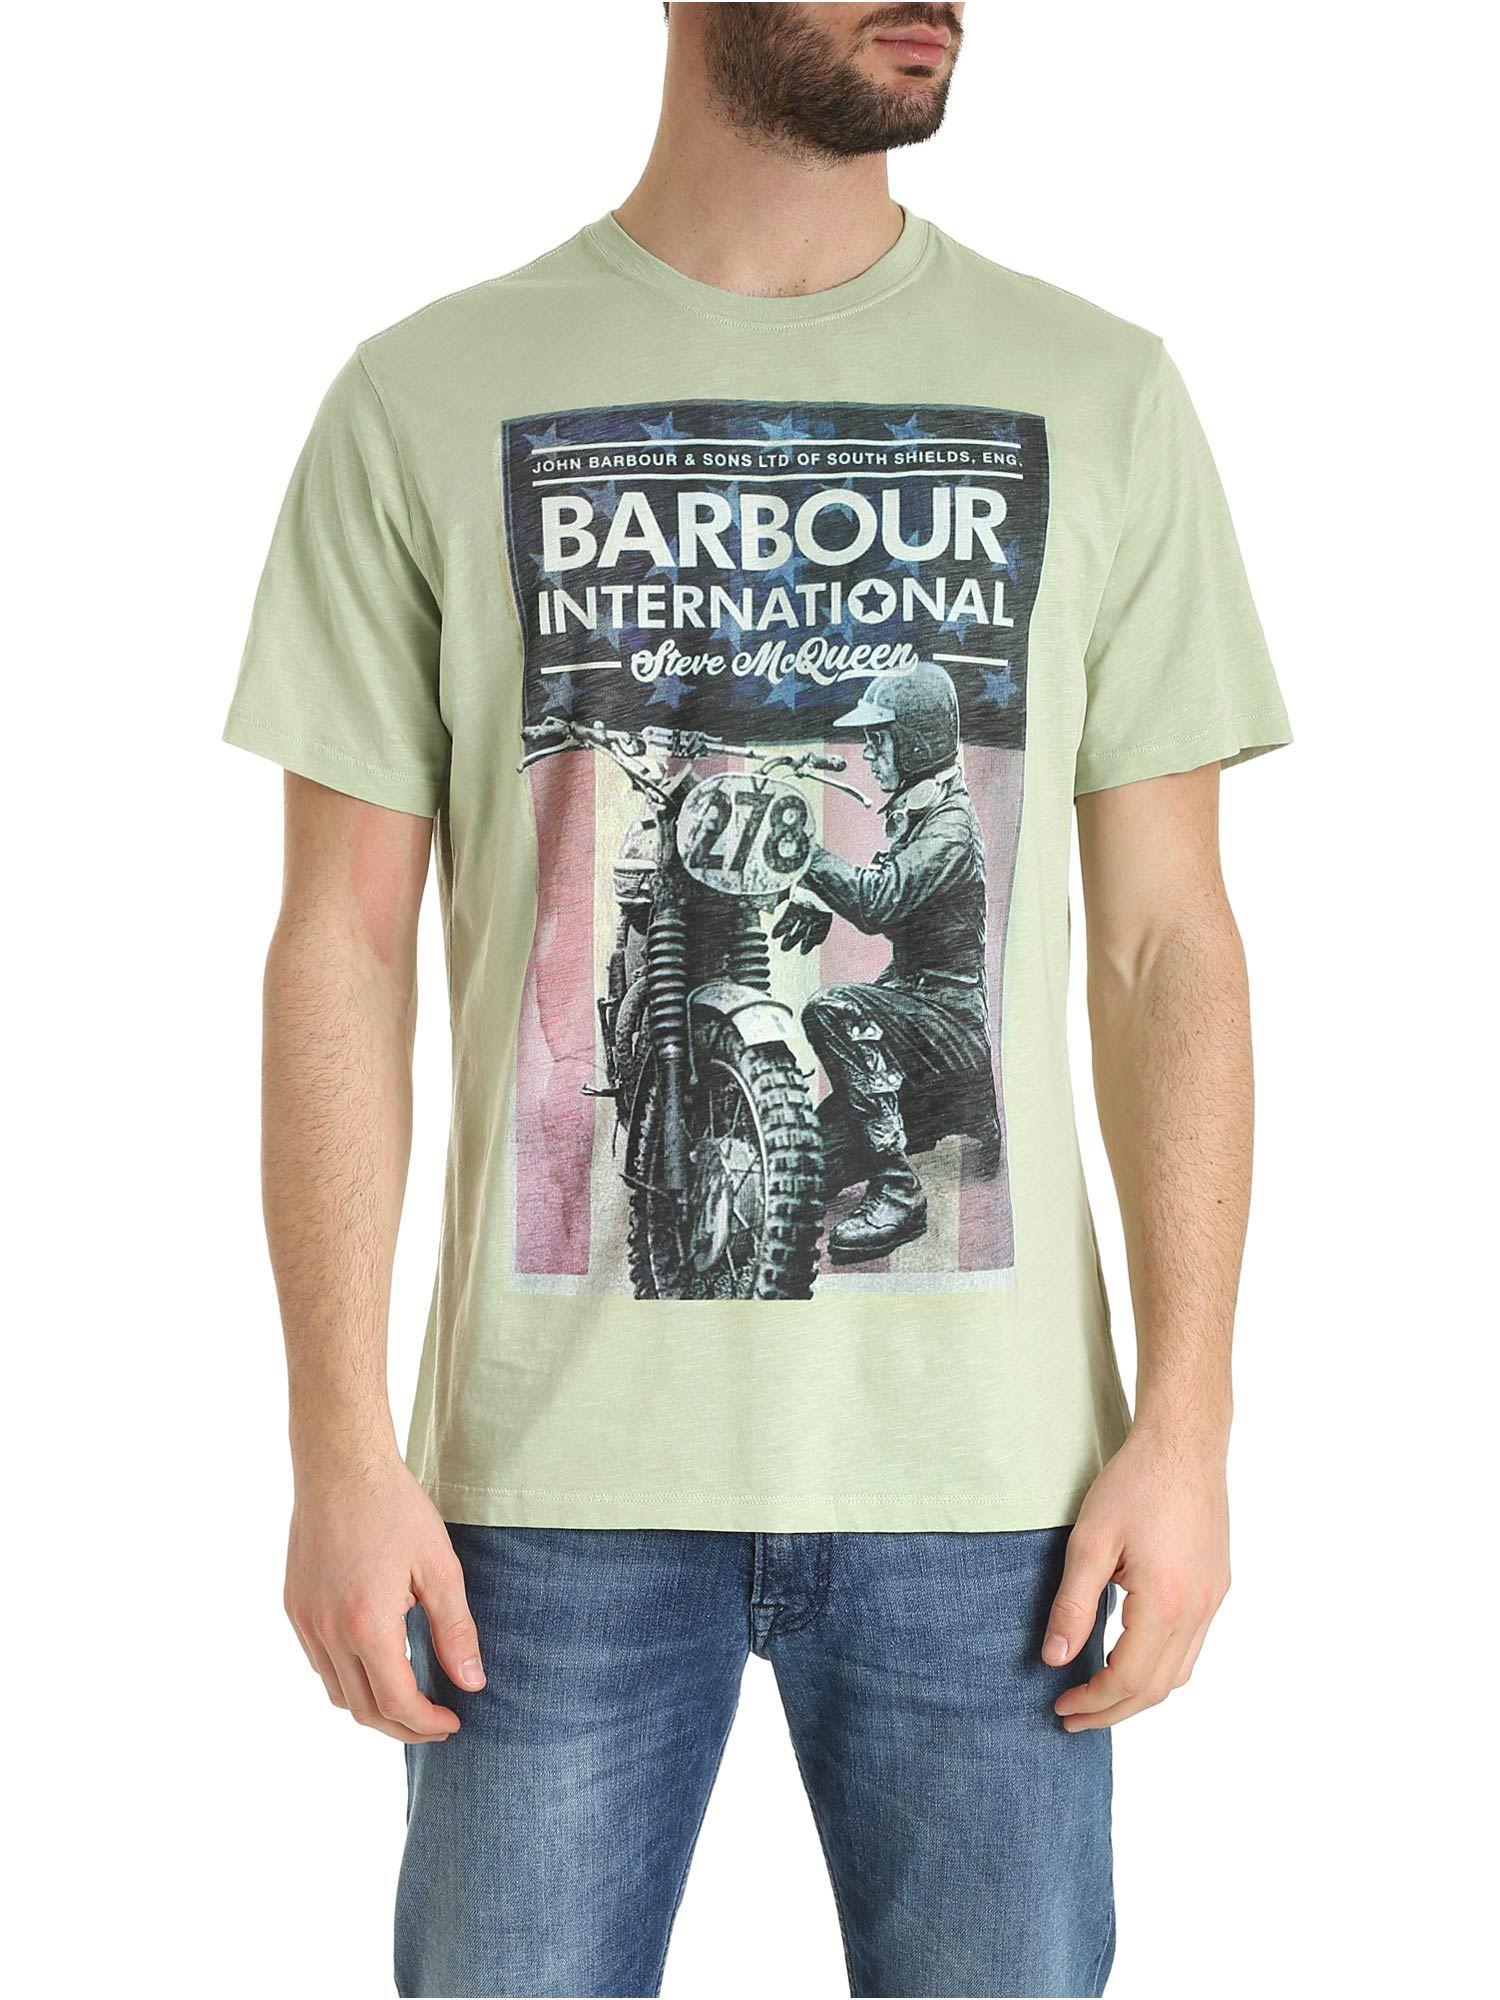 Barbour Tee Shirts Factory Sale, 60% OFF | campingcanyelles.com